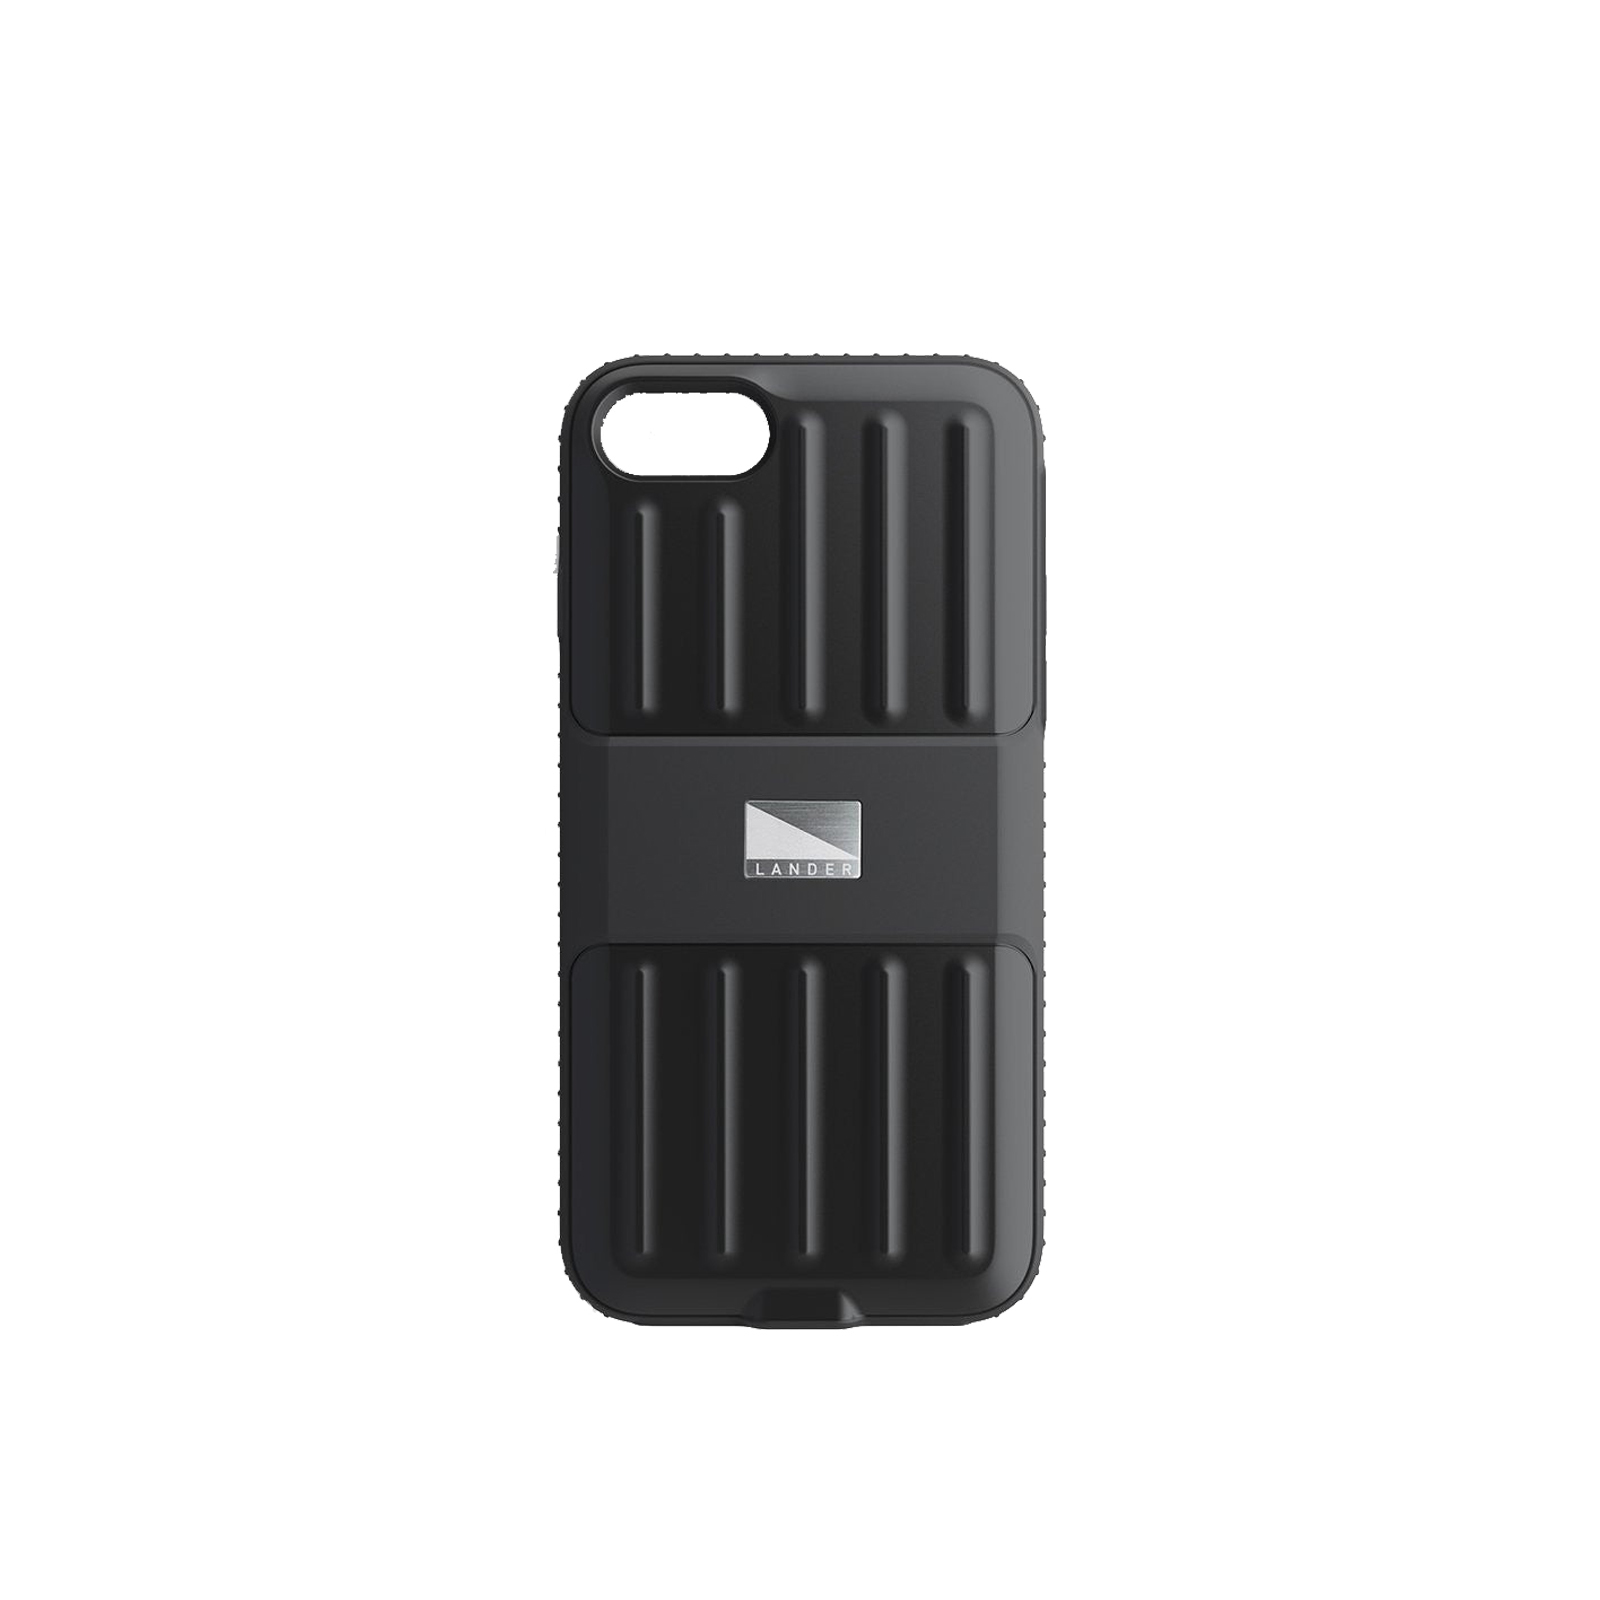 Powell iPhone 7 Plus / 8 Plus Black Case Brand New